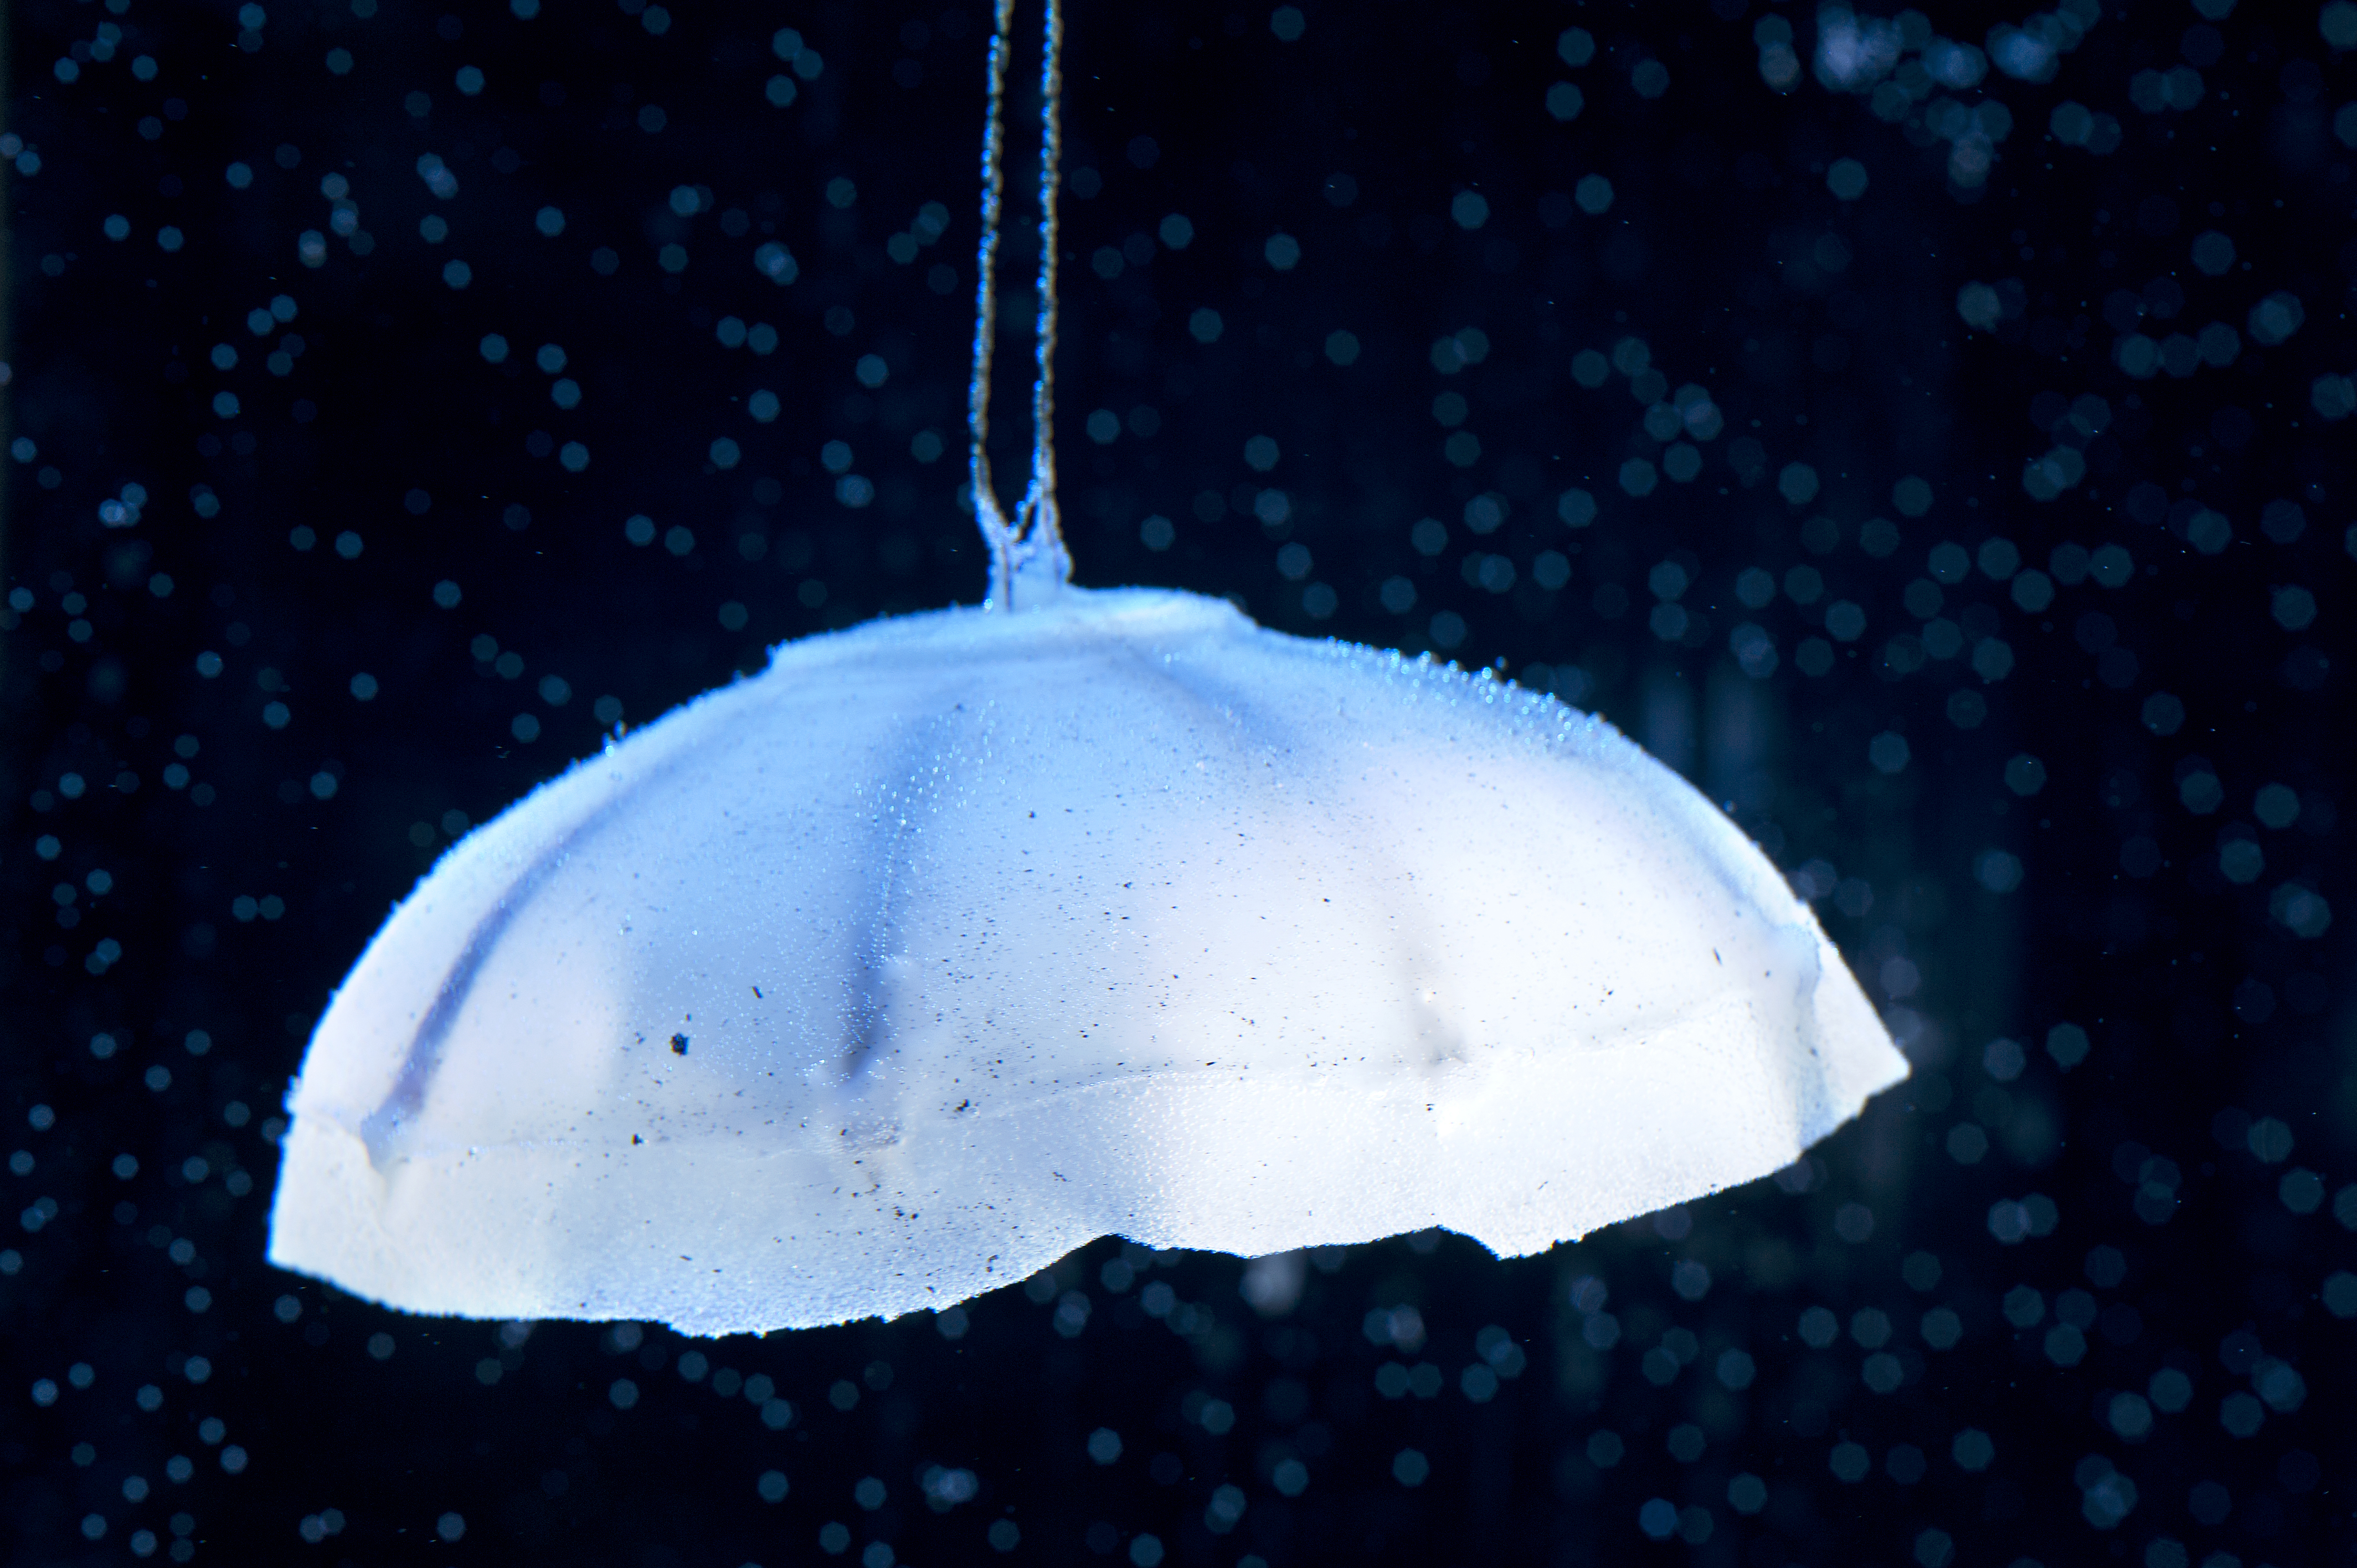 Robotic jellyfish built by Virginia Tech